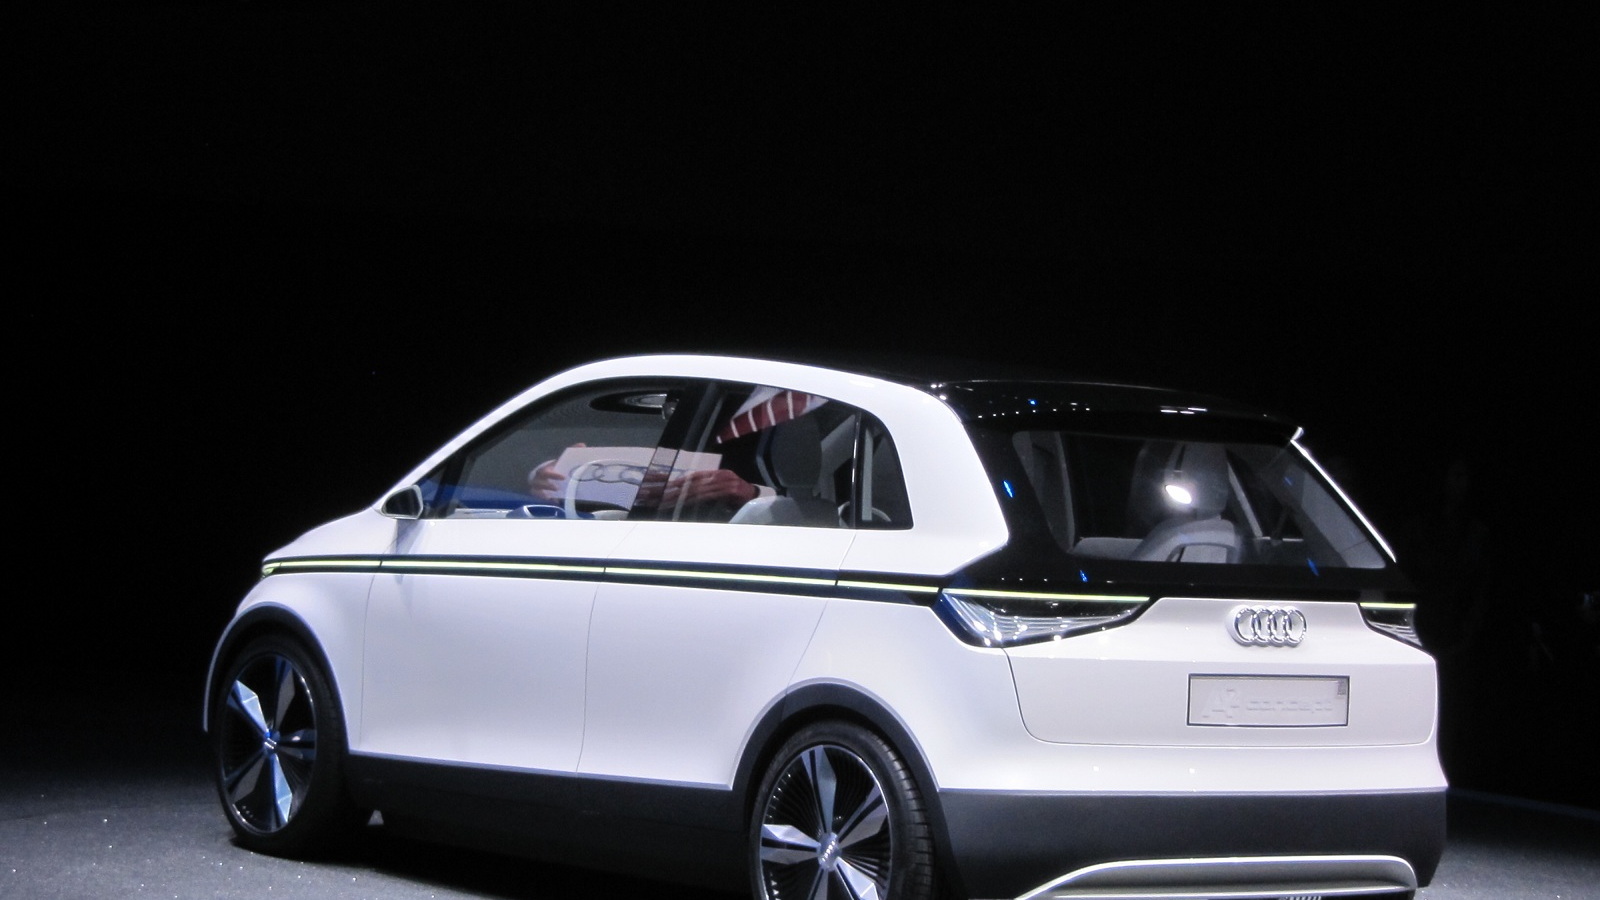 Audi A2 Concept, Frankfurt Motor Show, September 2011